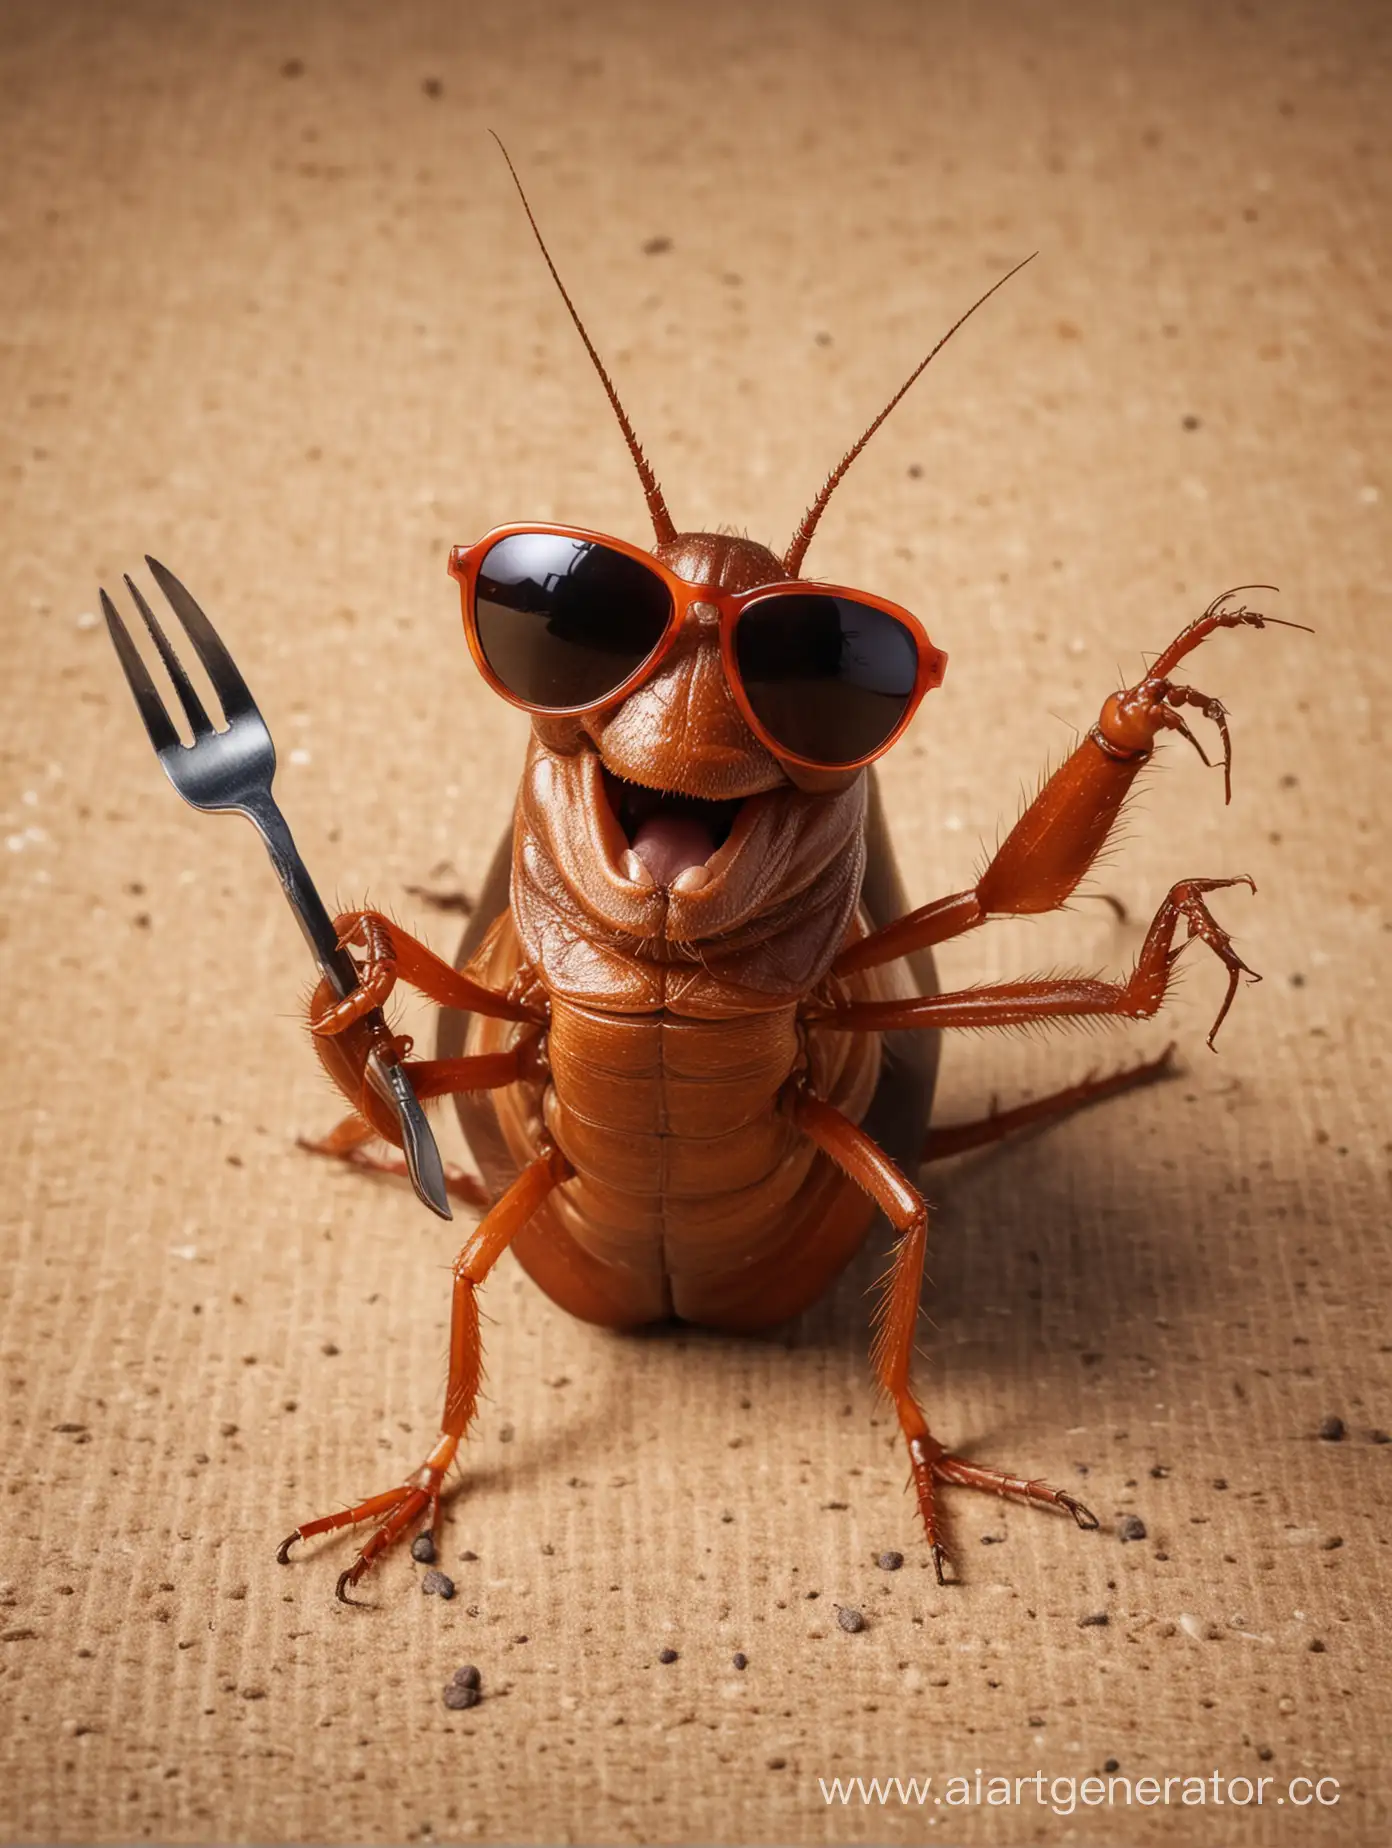 Cheerful-Cockroach-in-Shades-Enjoying-a-Feast